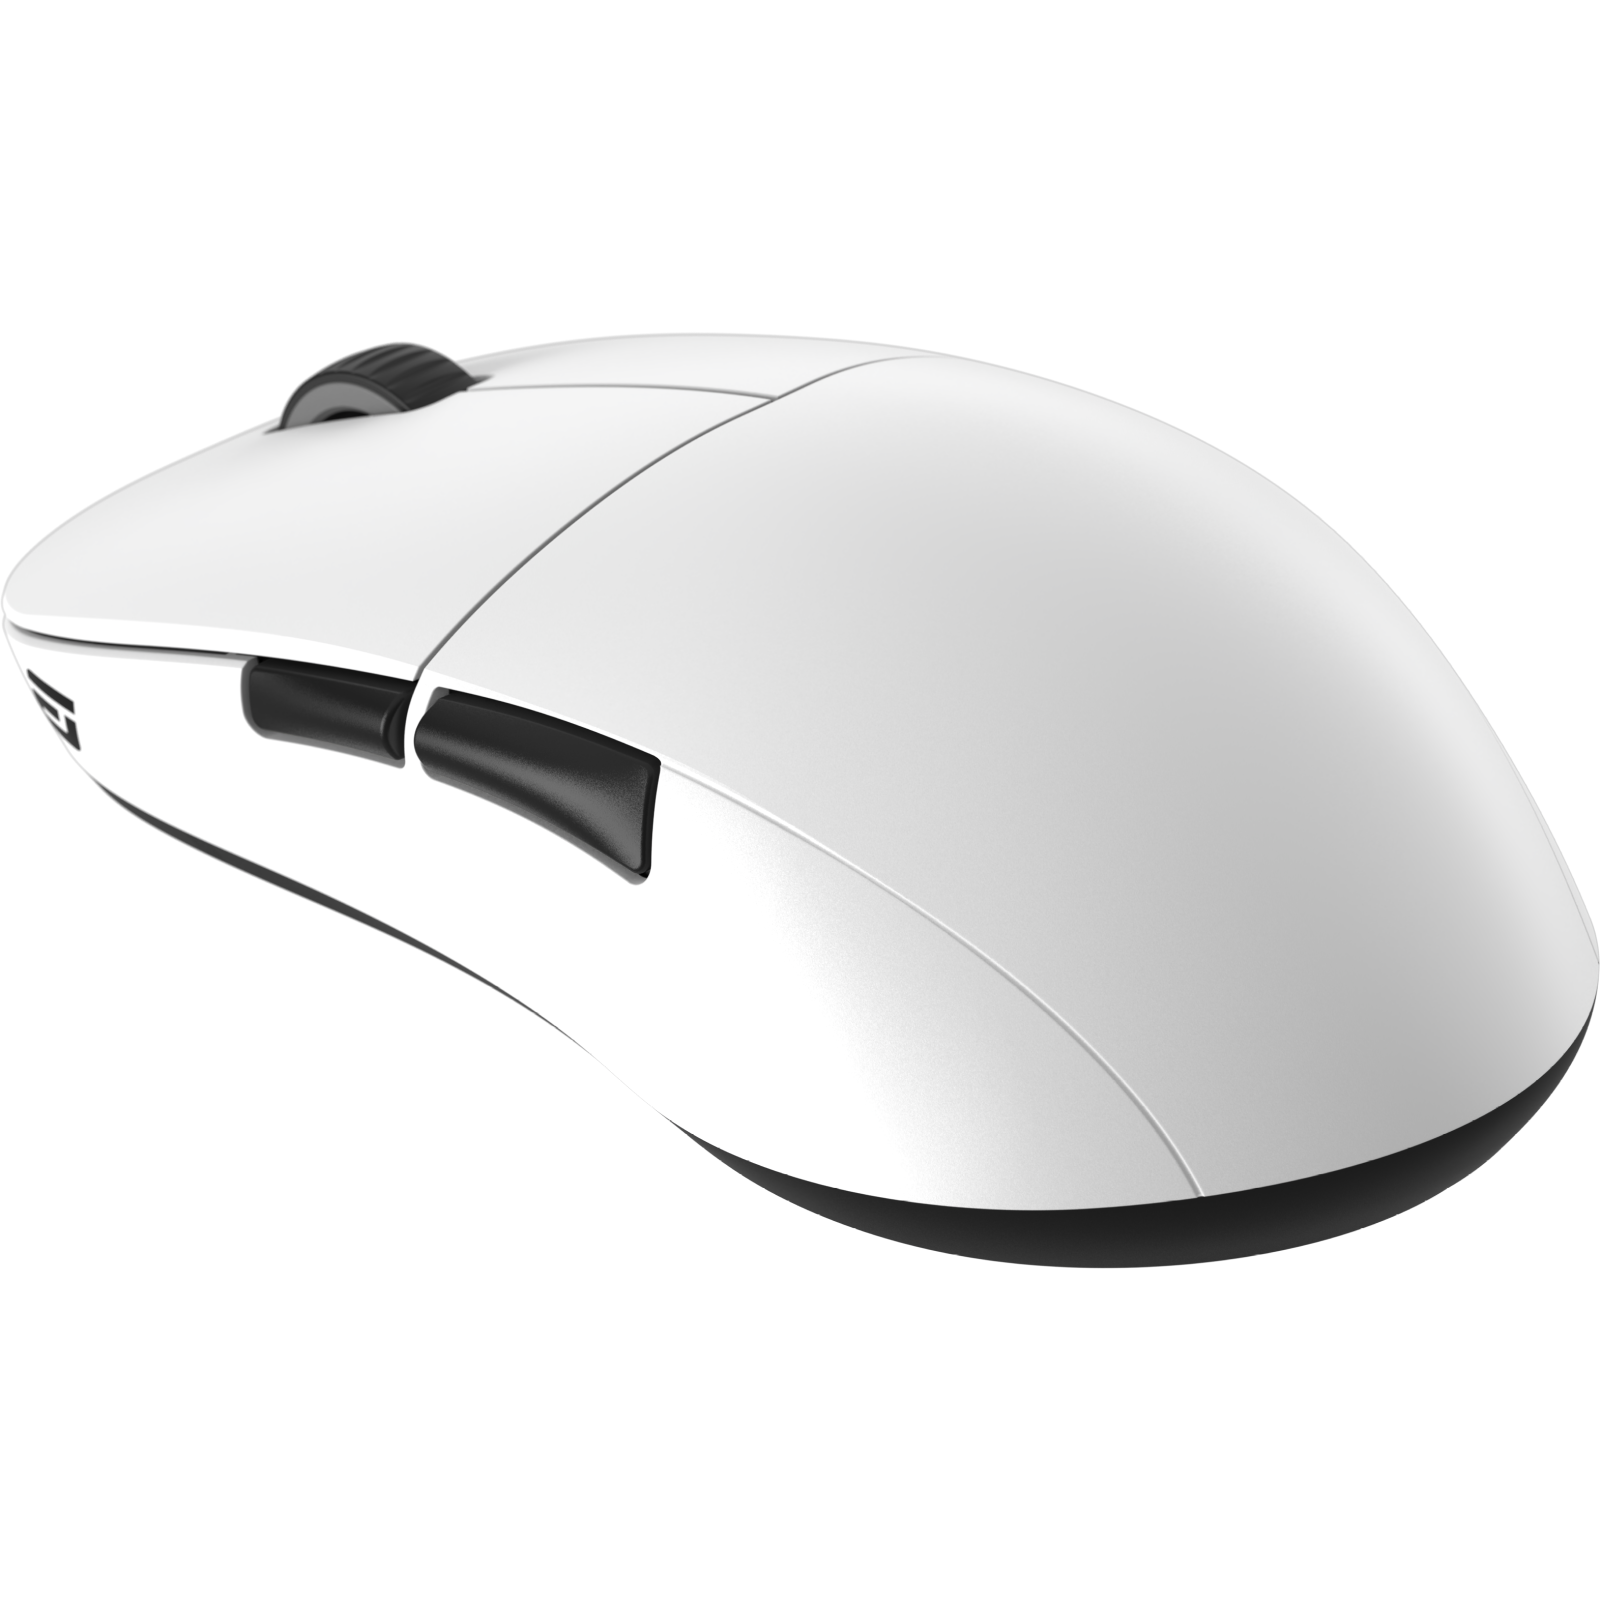 Endgame Gear XM2we Gaming Mouse White